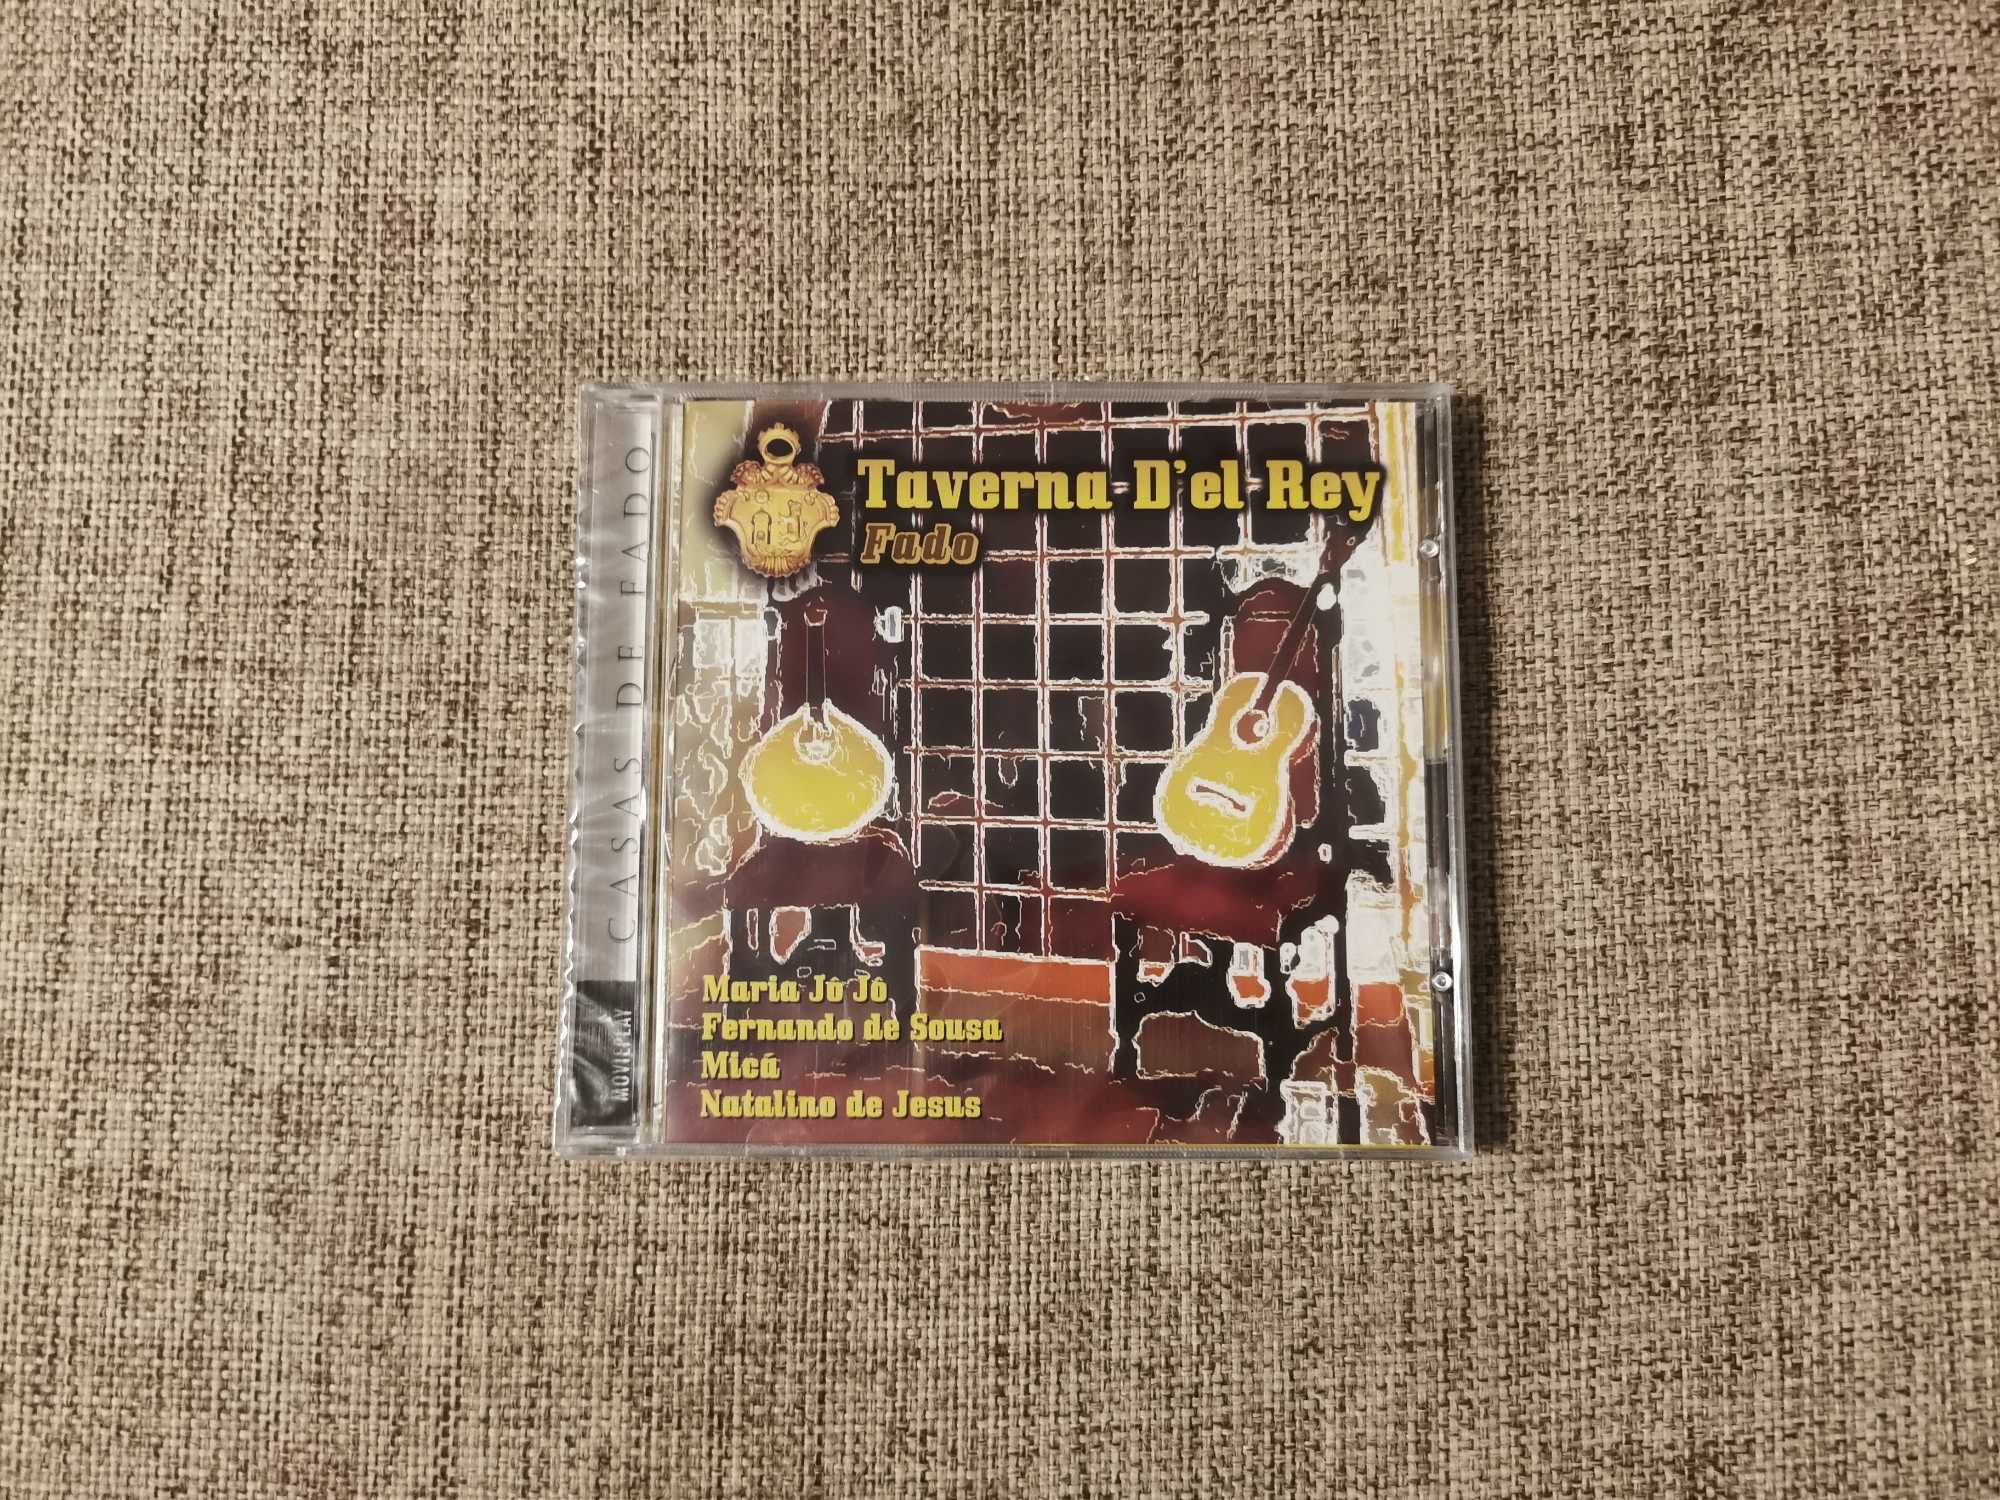 Muzyka CD - Taverna D' el Rey Fado album